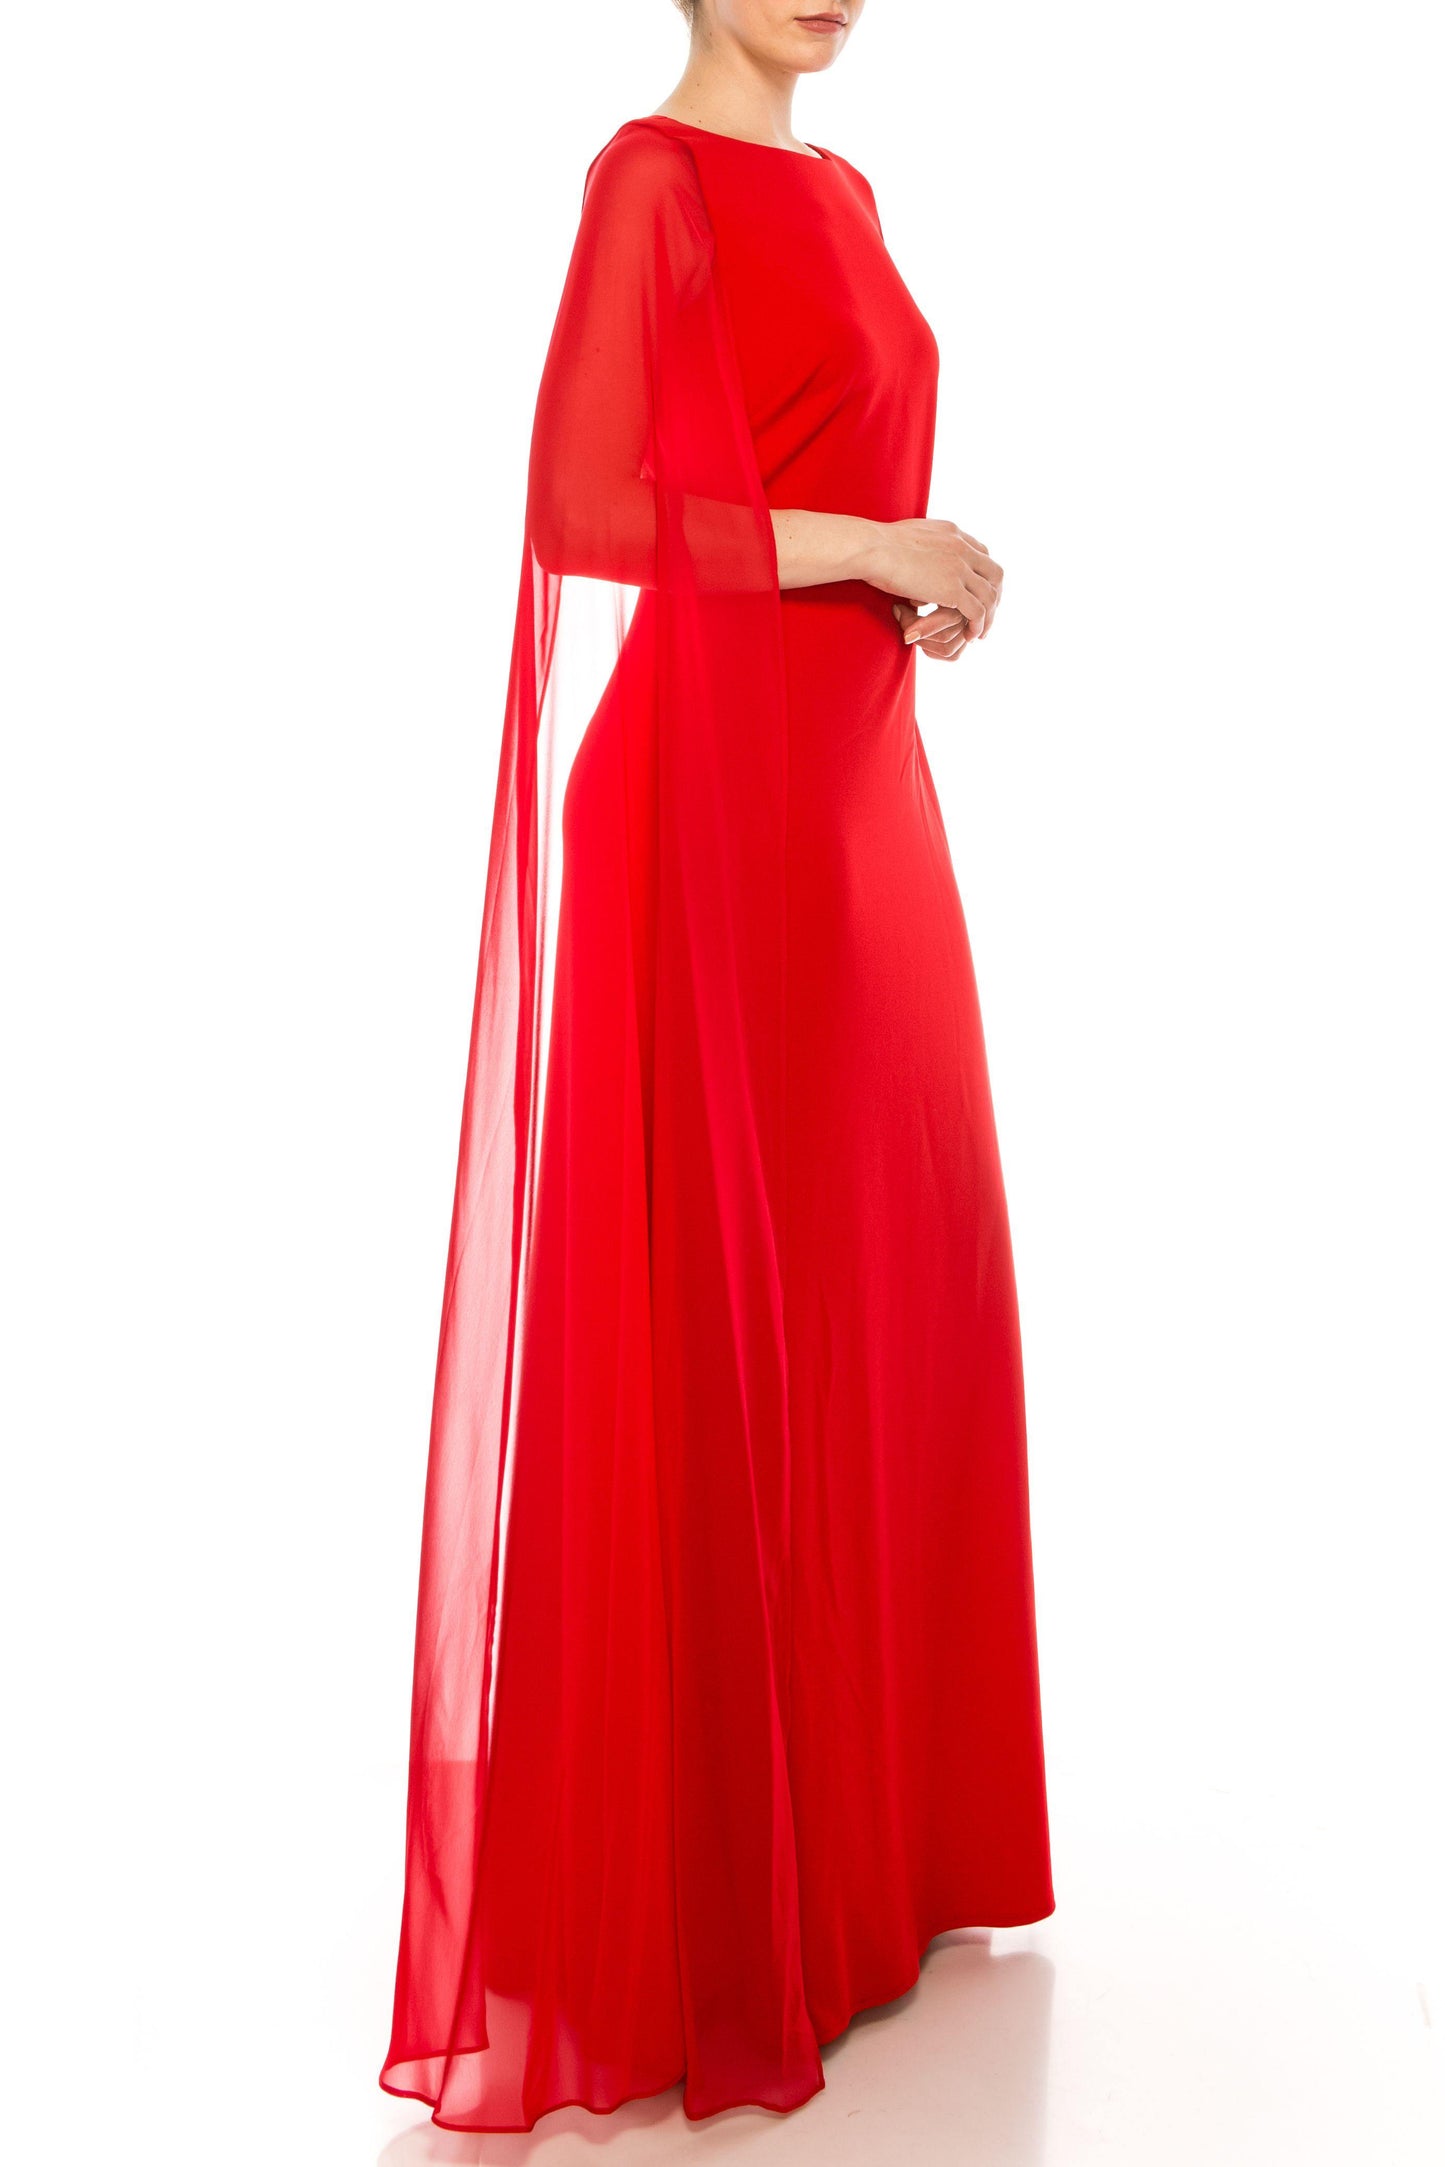 Alex Evenings Long Formal Chiffon Dress 8160255 - The Dress Outlet